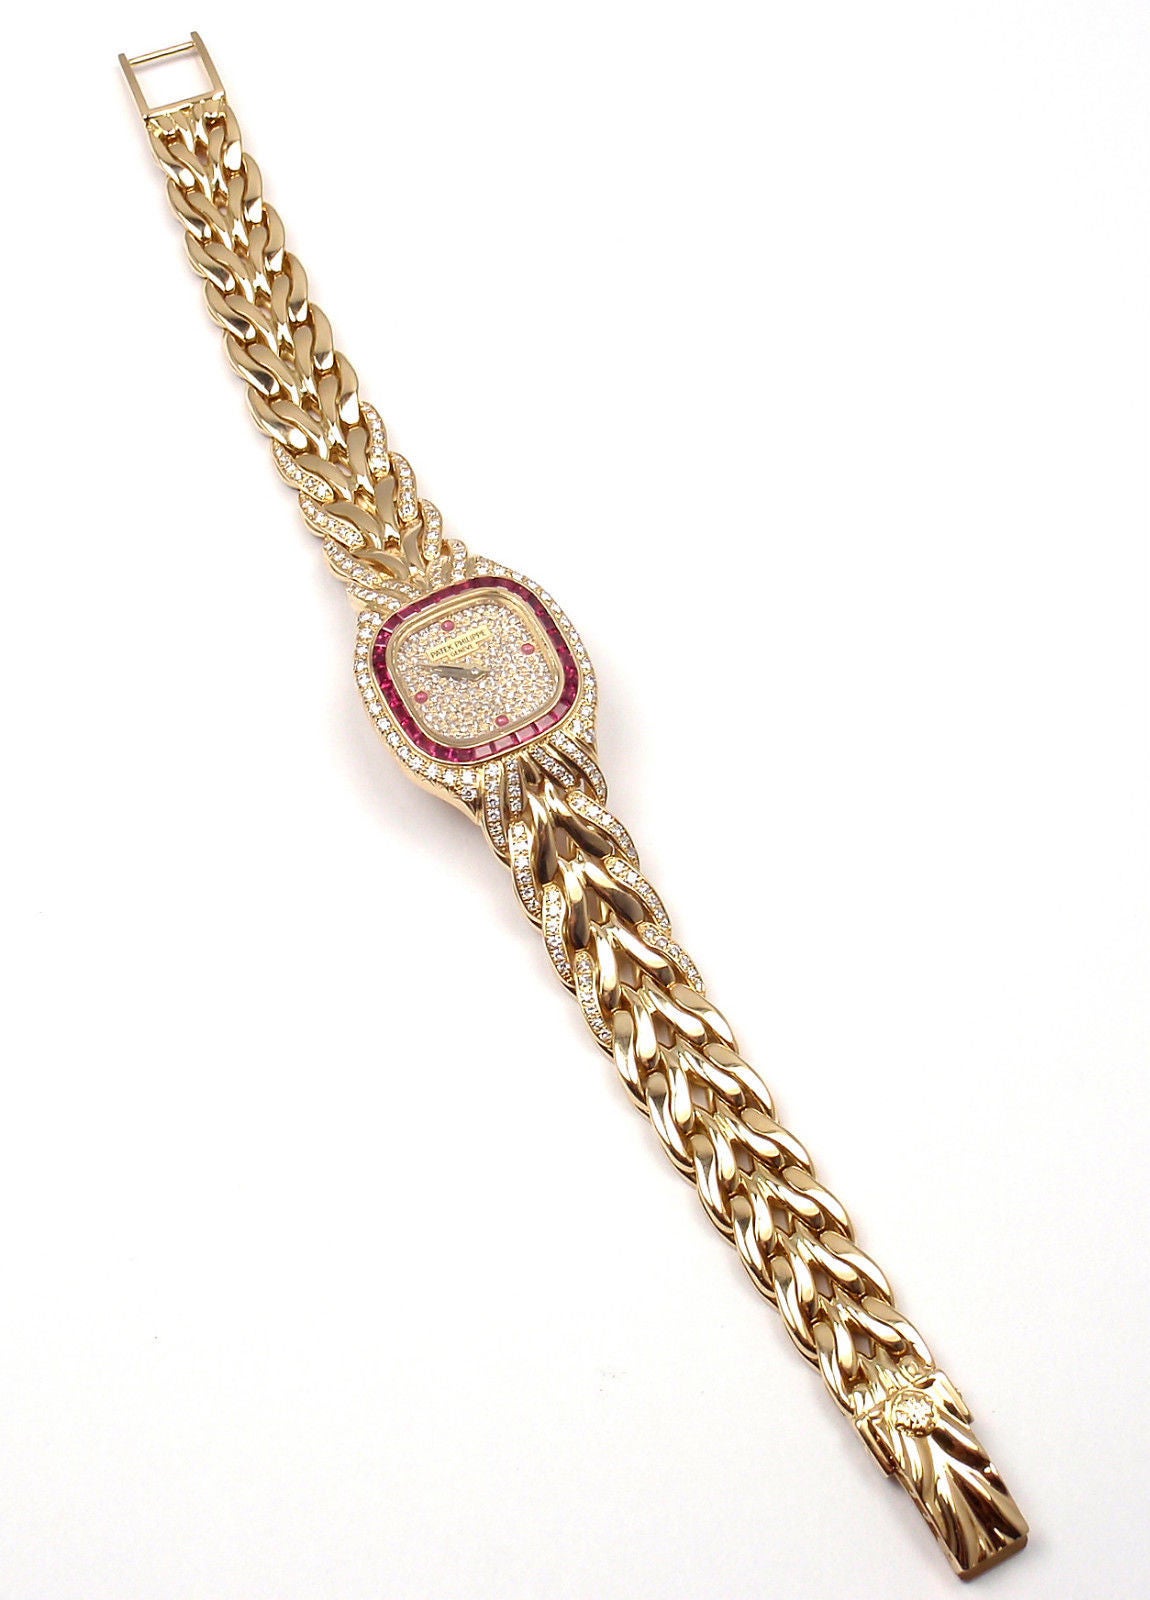 Women's Patek Philippe Lady's Yellow Gold, Diamond and Ruby La Flamme Bracelet Watch